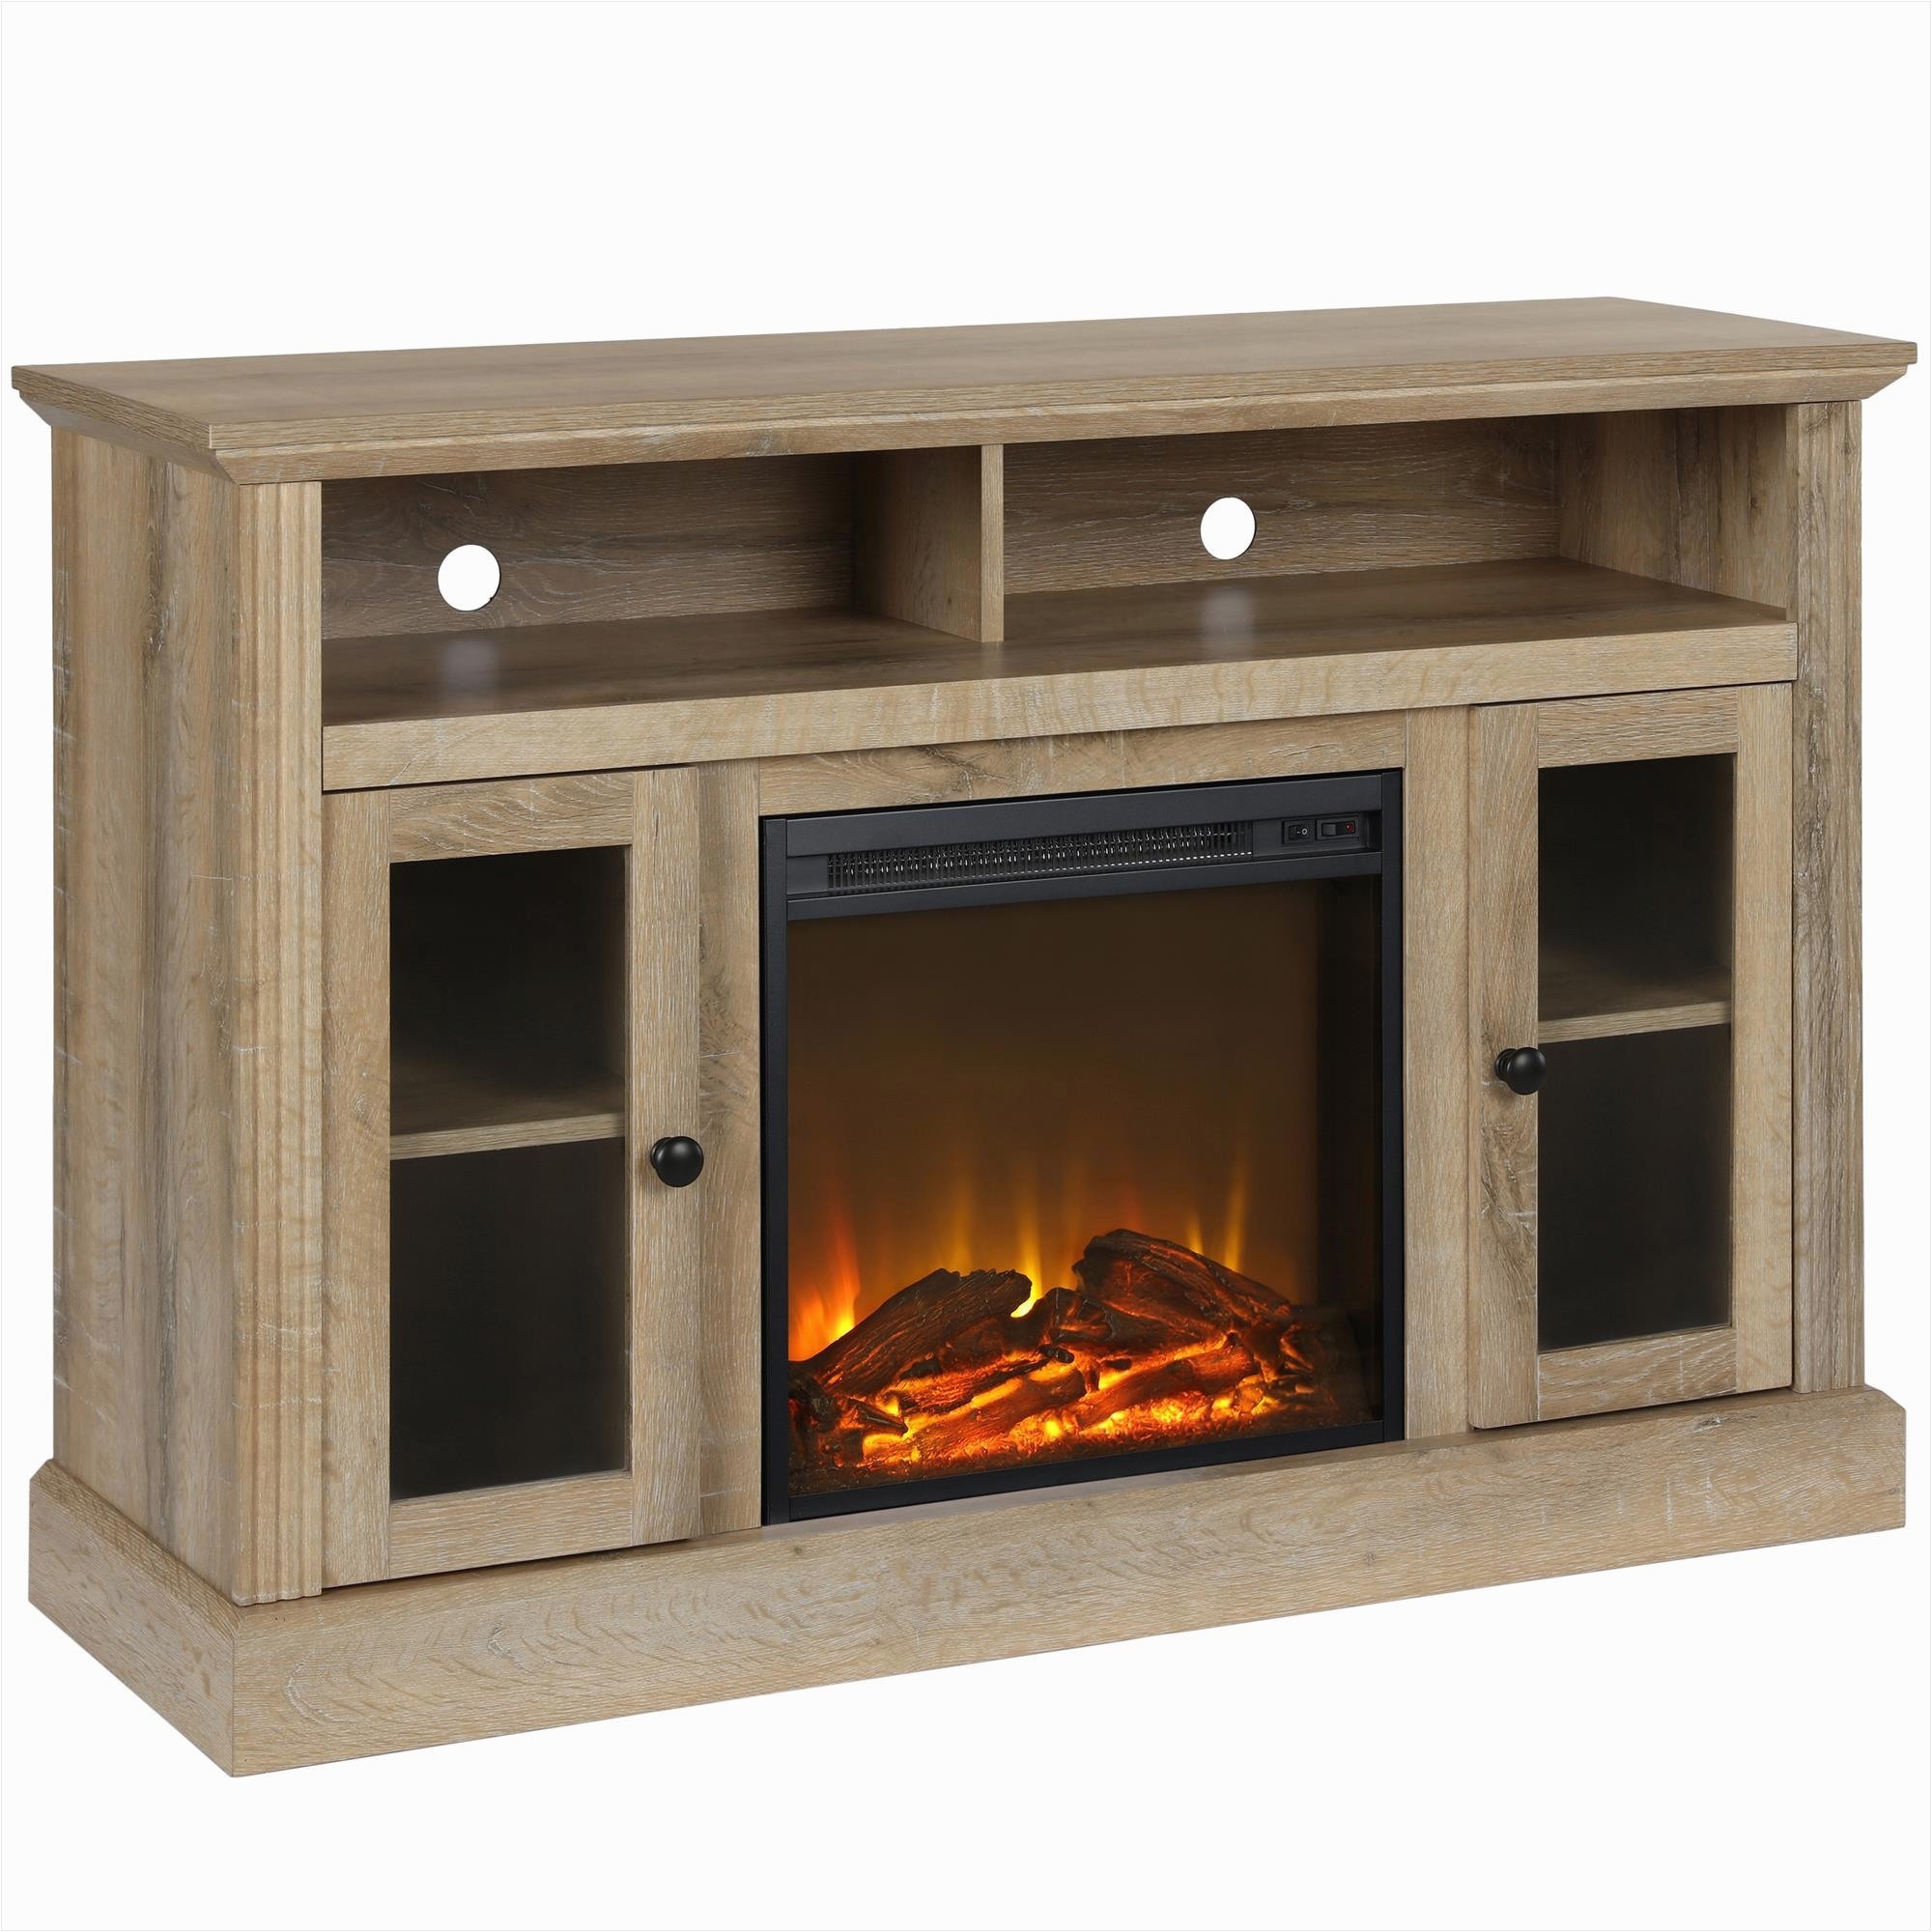 Fireplace Mantels Home Depot Elegant White Mantel Gas Fireplace